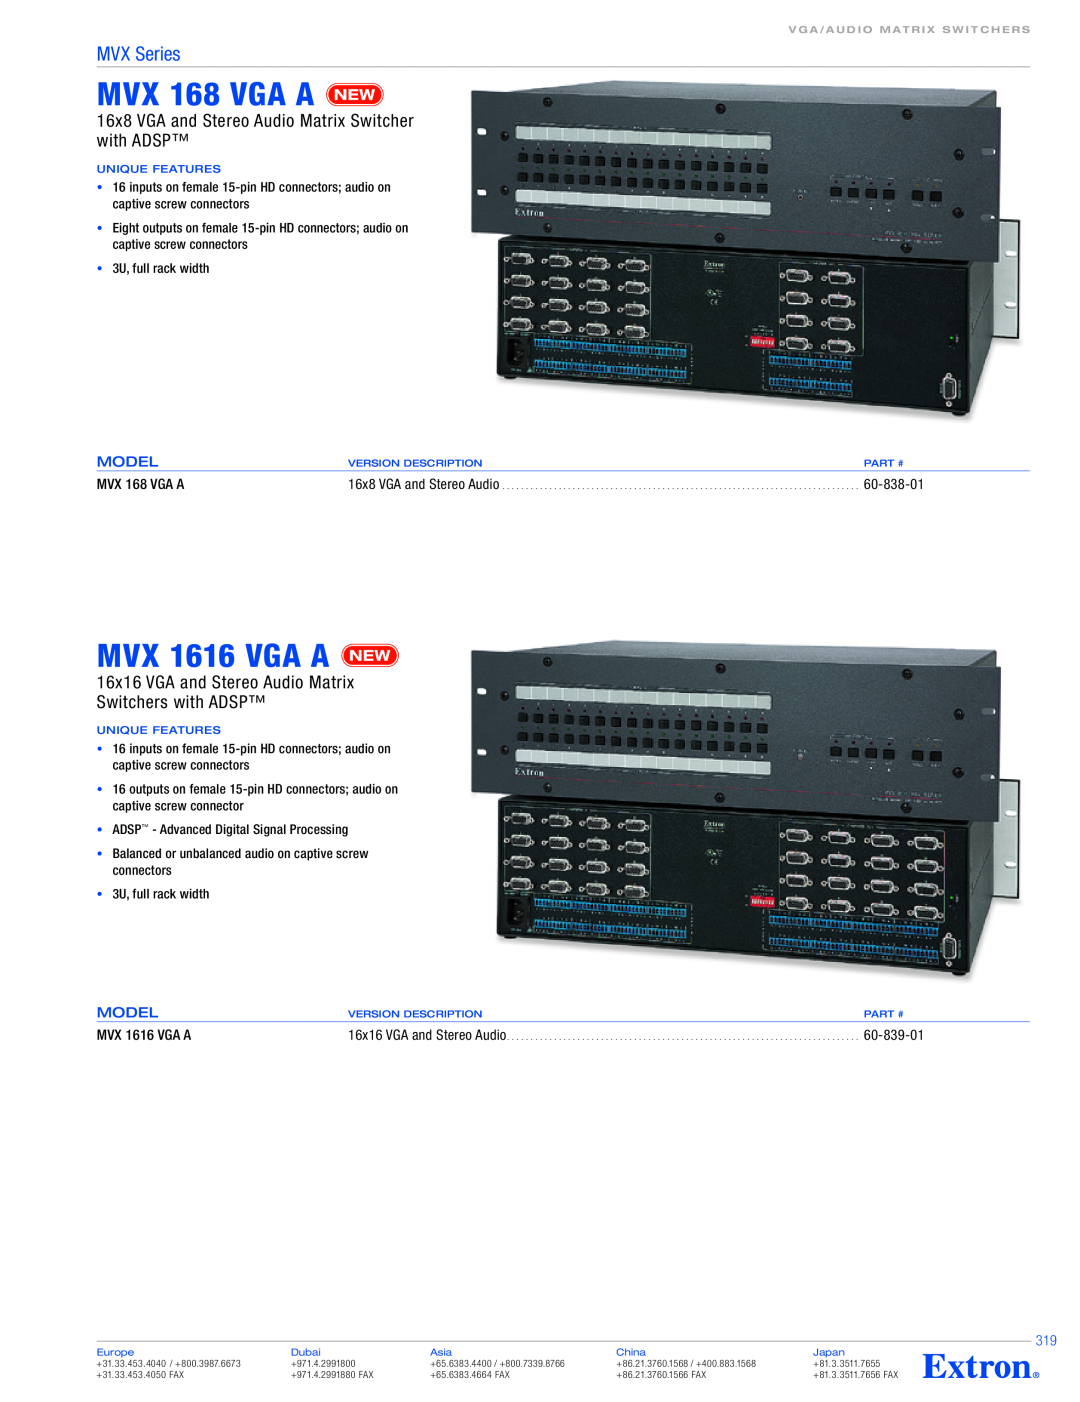 Extron electronic MVX Series MVX 168 VGA A, MVX 1616 VGA A, 16x8 VGA and Stereo Audio Matrix Switcher with ADSP, 60-838-01 